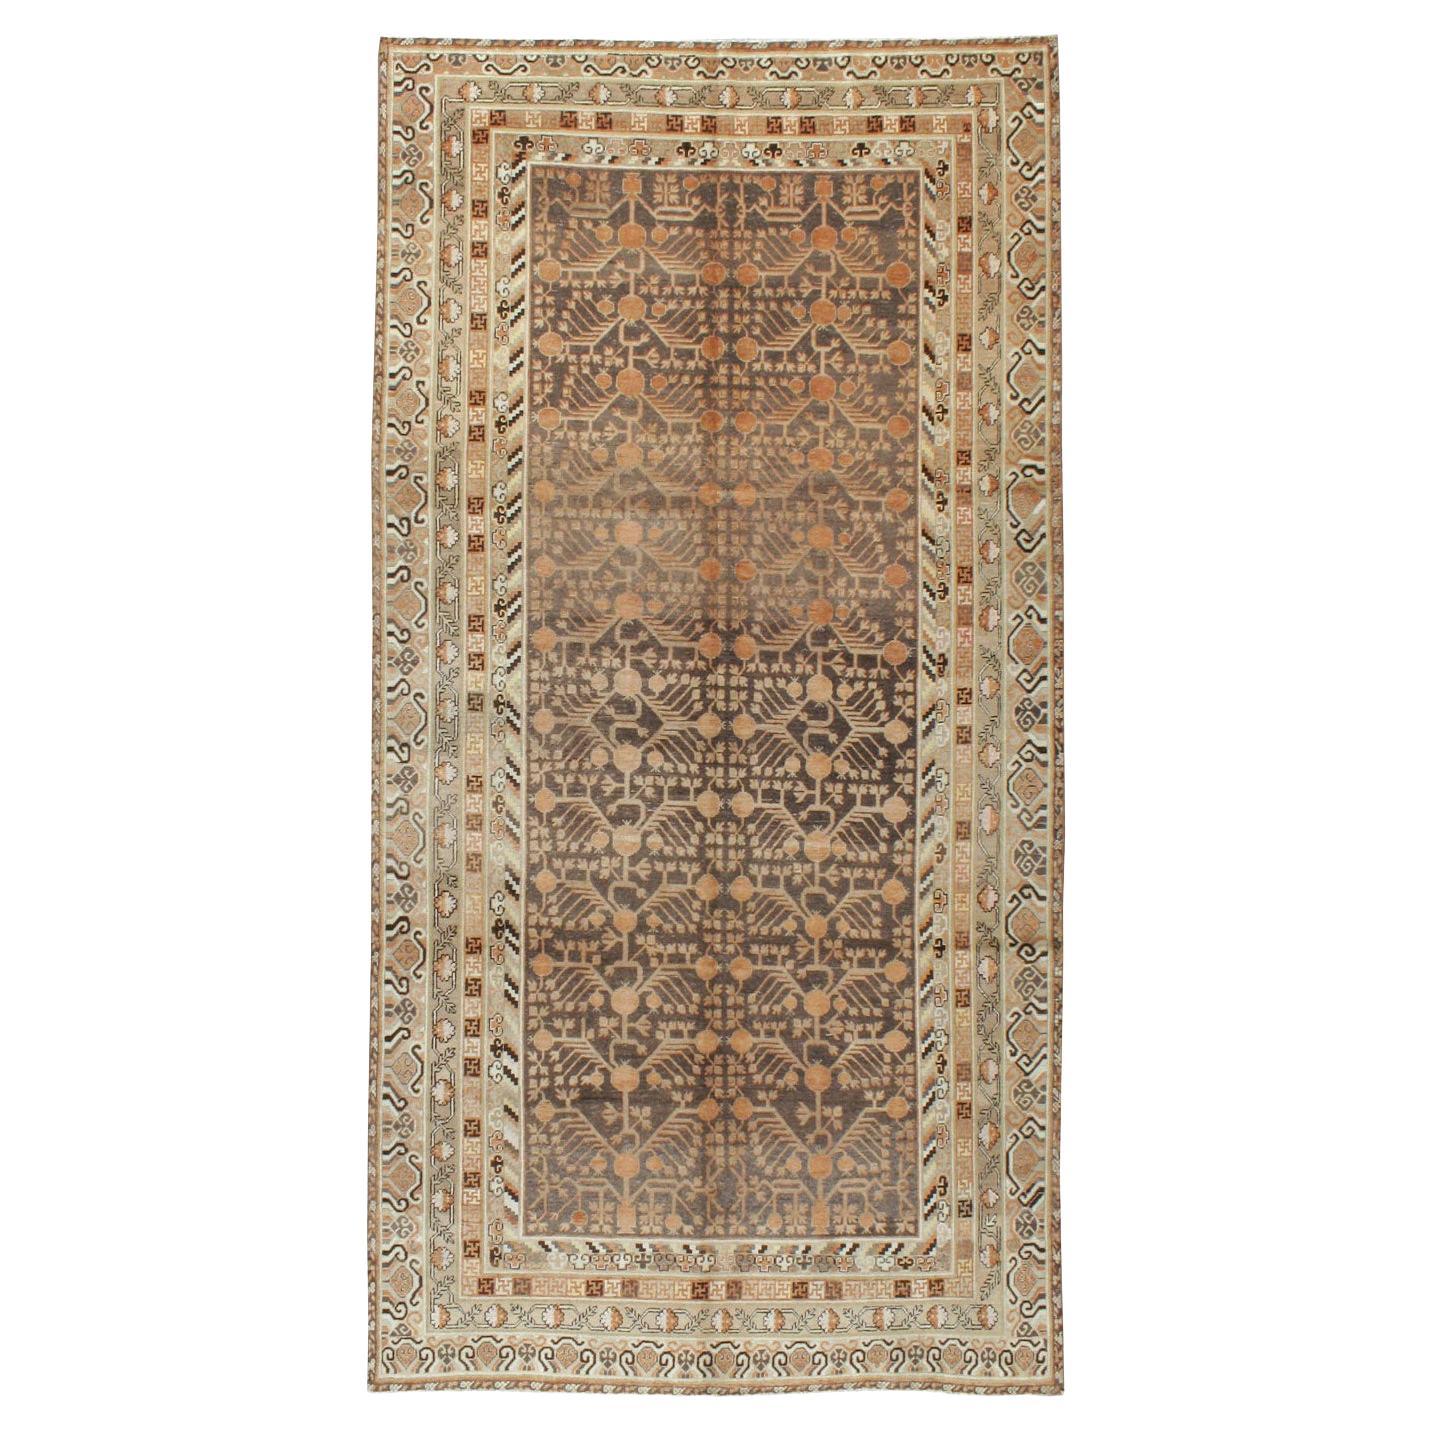 Early 20th Century Handmade East Turkestan Khotan Gallery Carpet For Sale